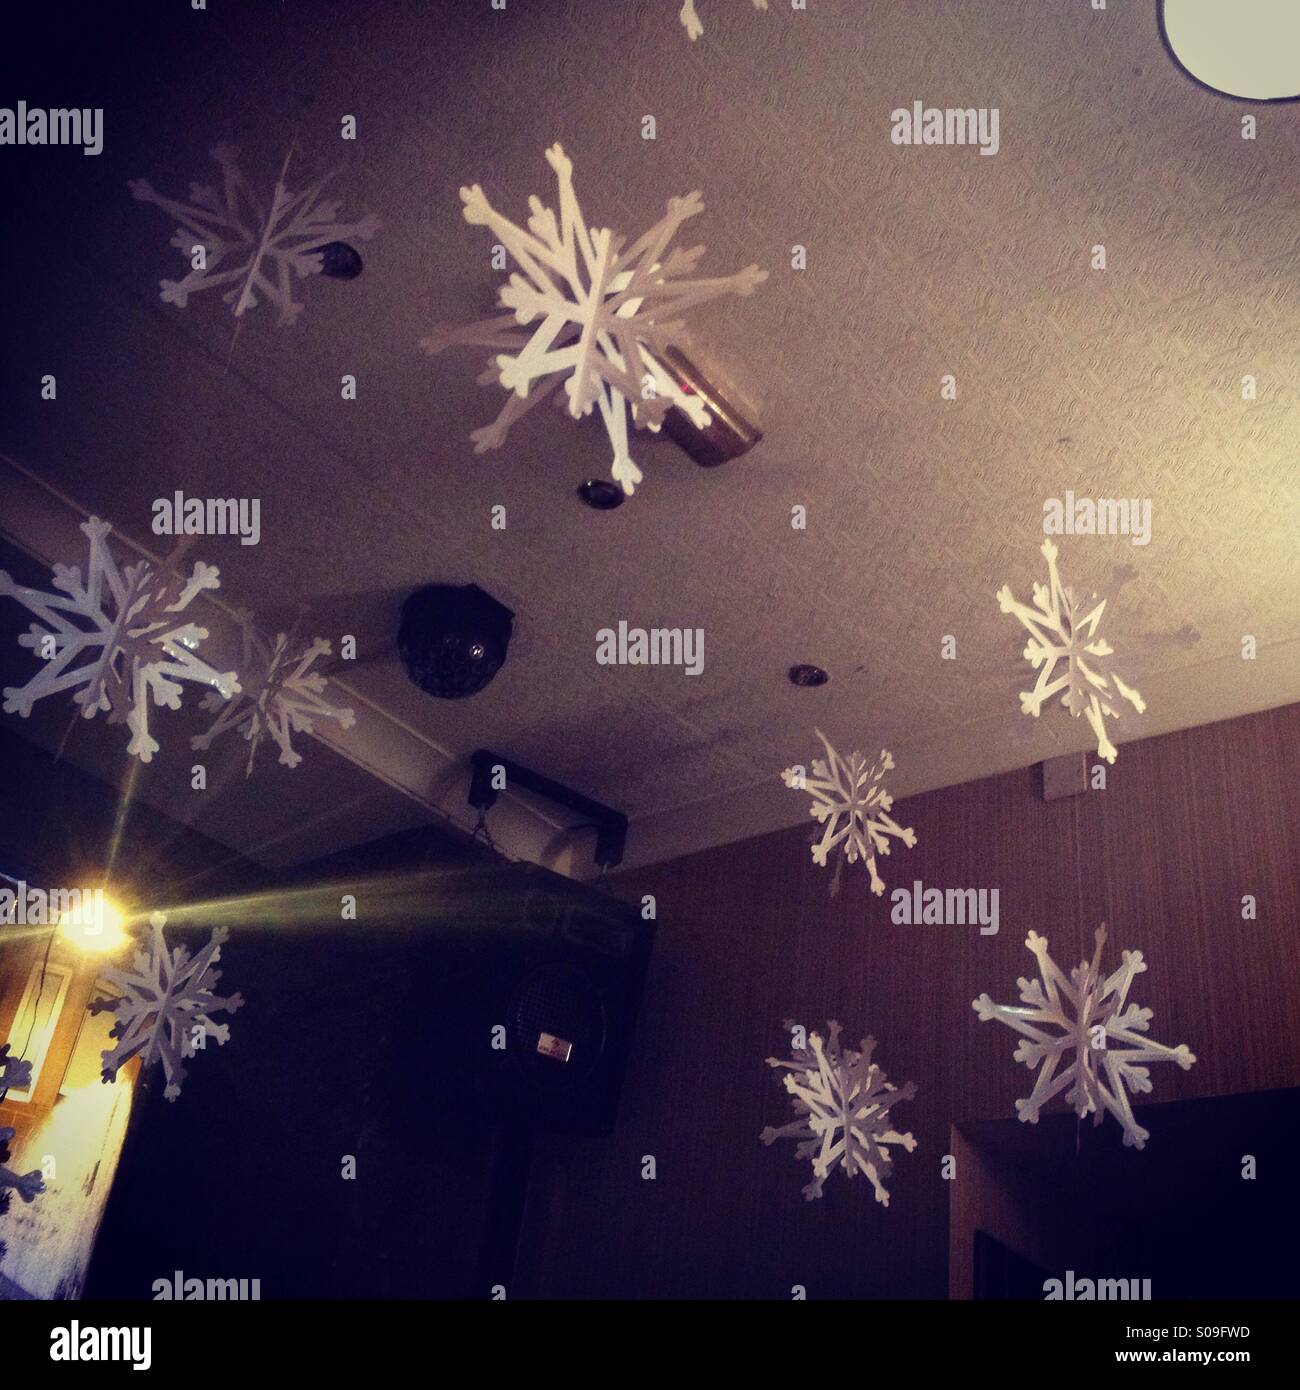 Festive snowflake decorations on bar ceiling. Stock Photo